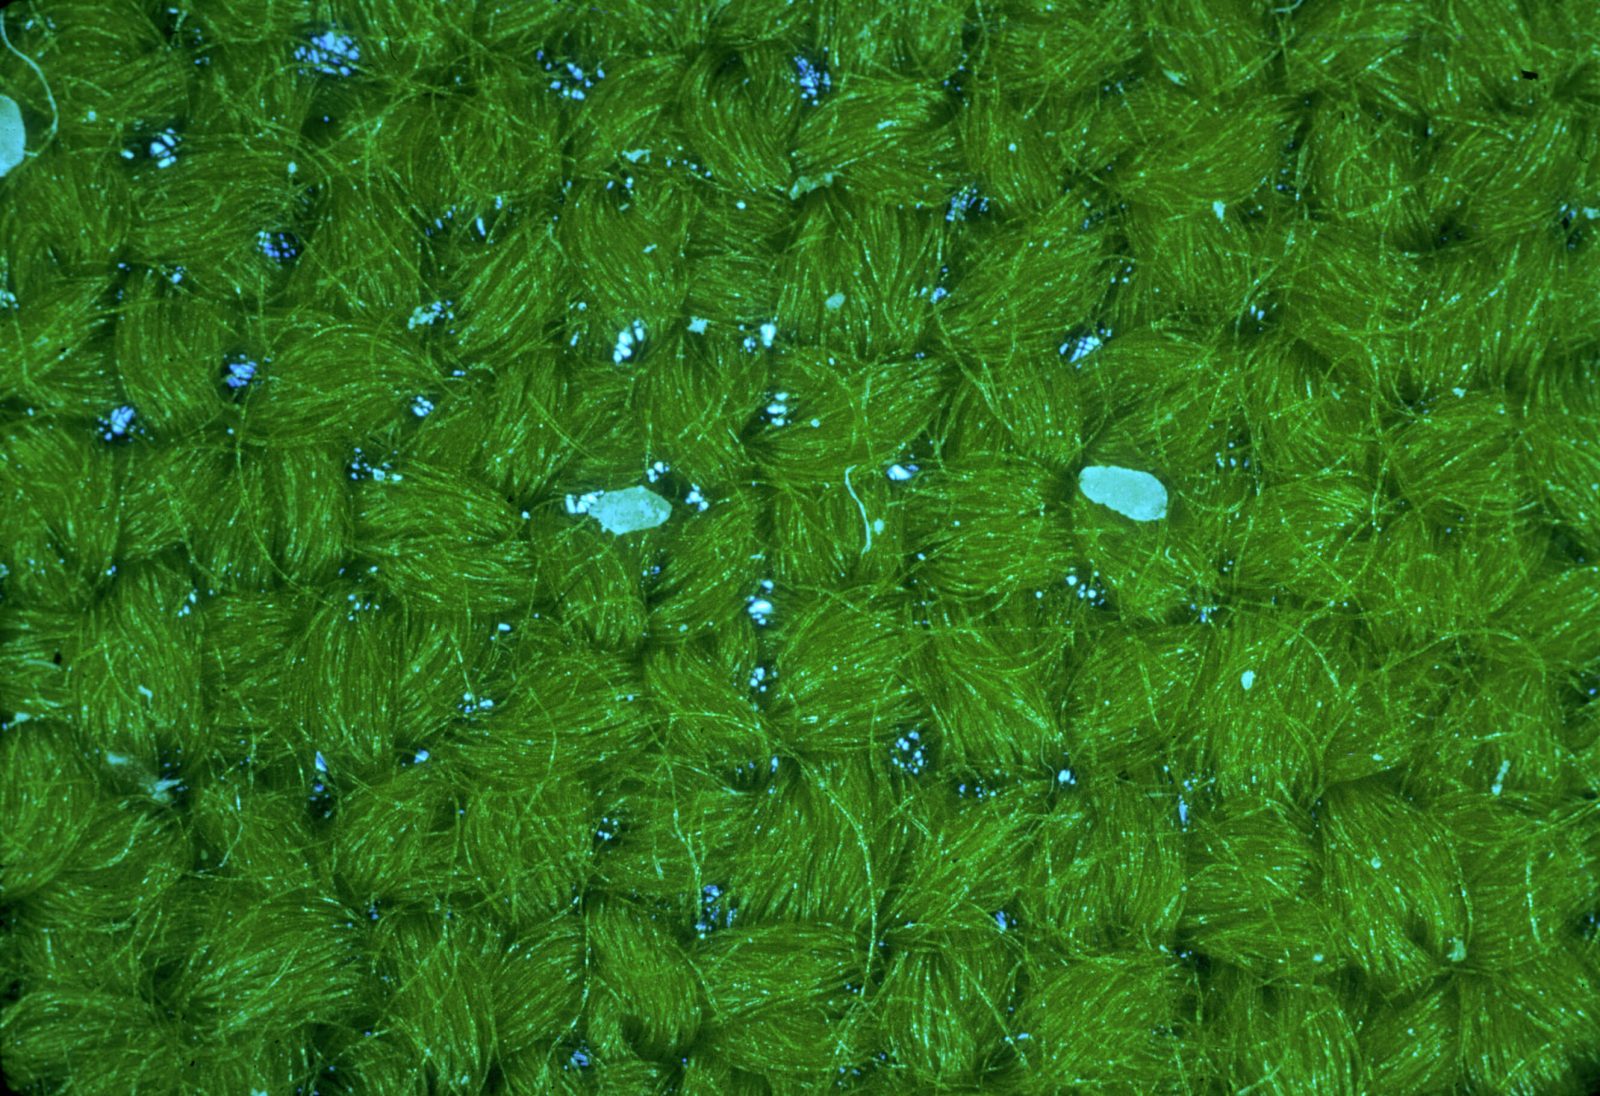 carpet beetle eggs on clothing